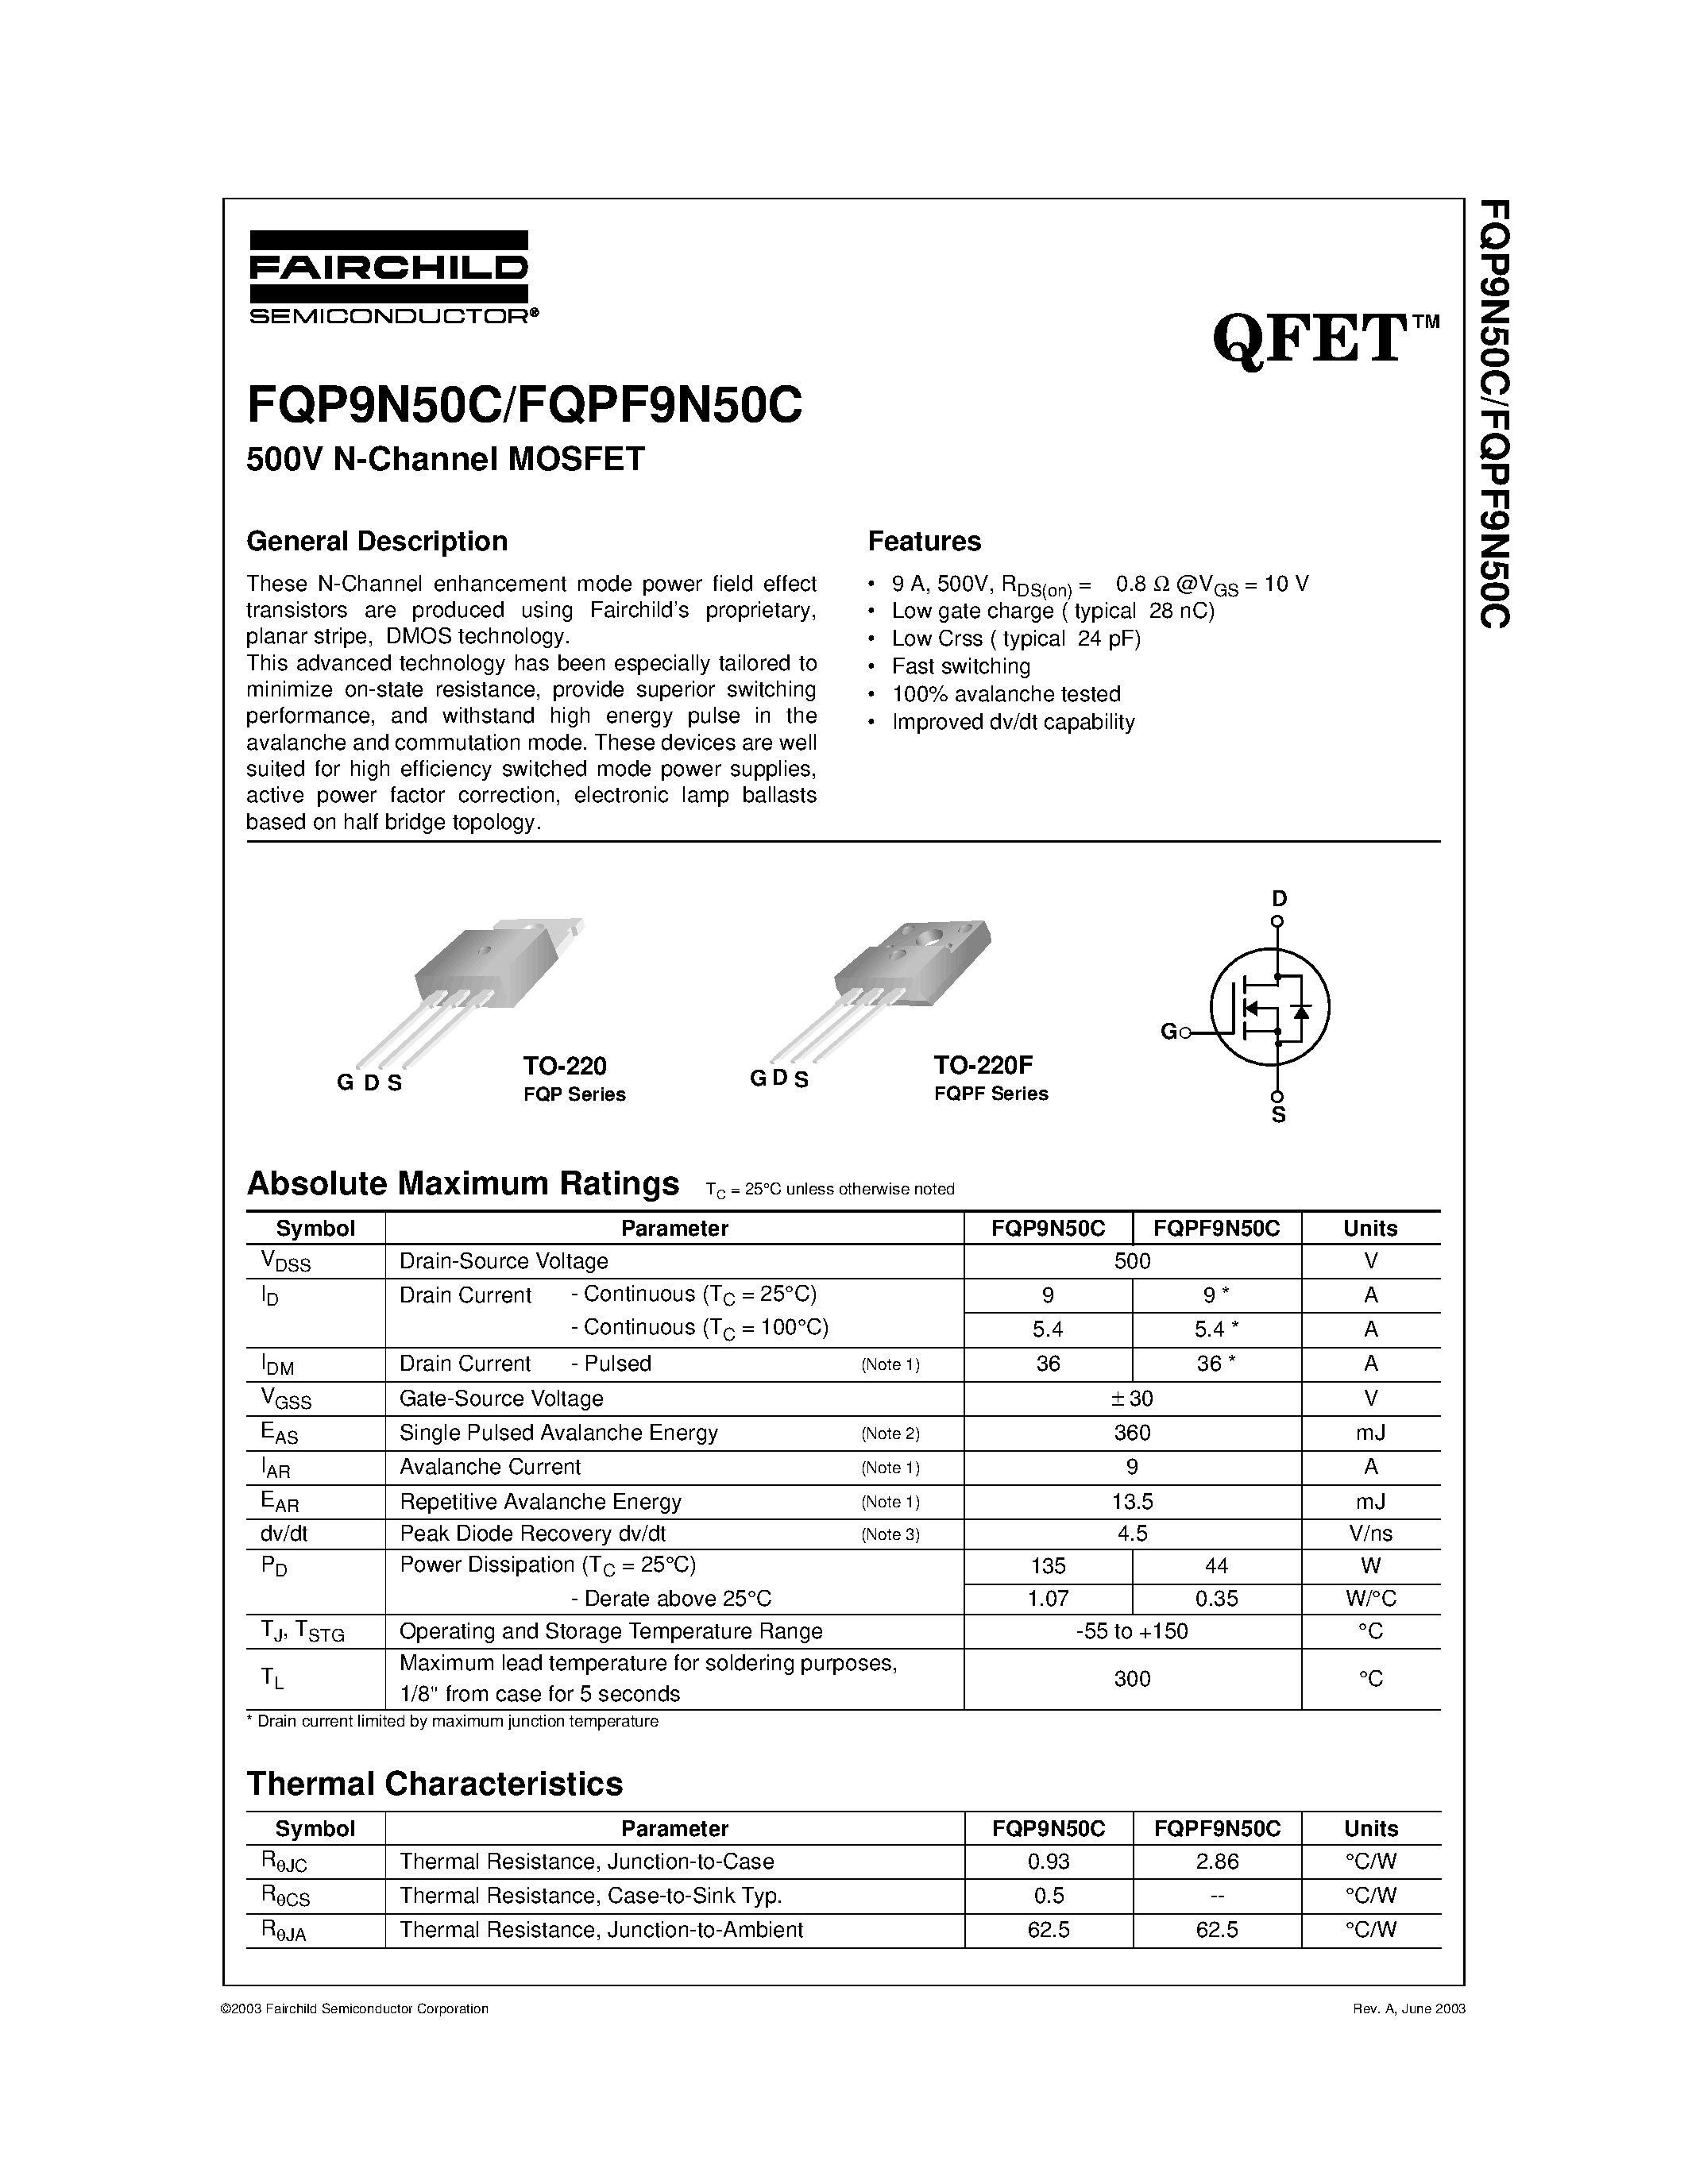 Datasheet FQPF9N50C - 500V N-Channel MOSFET page 1